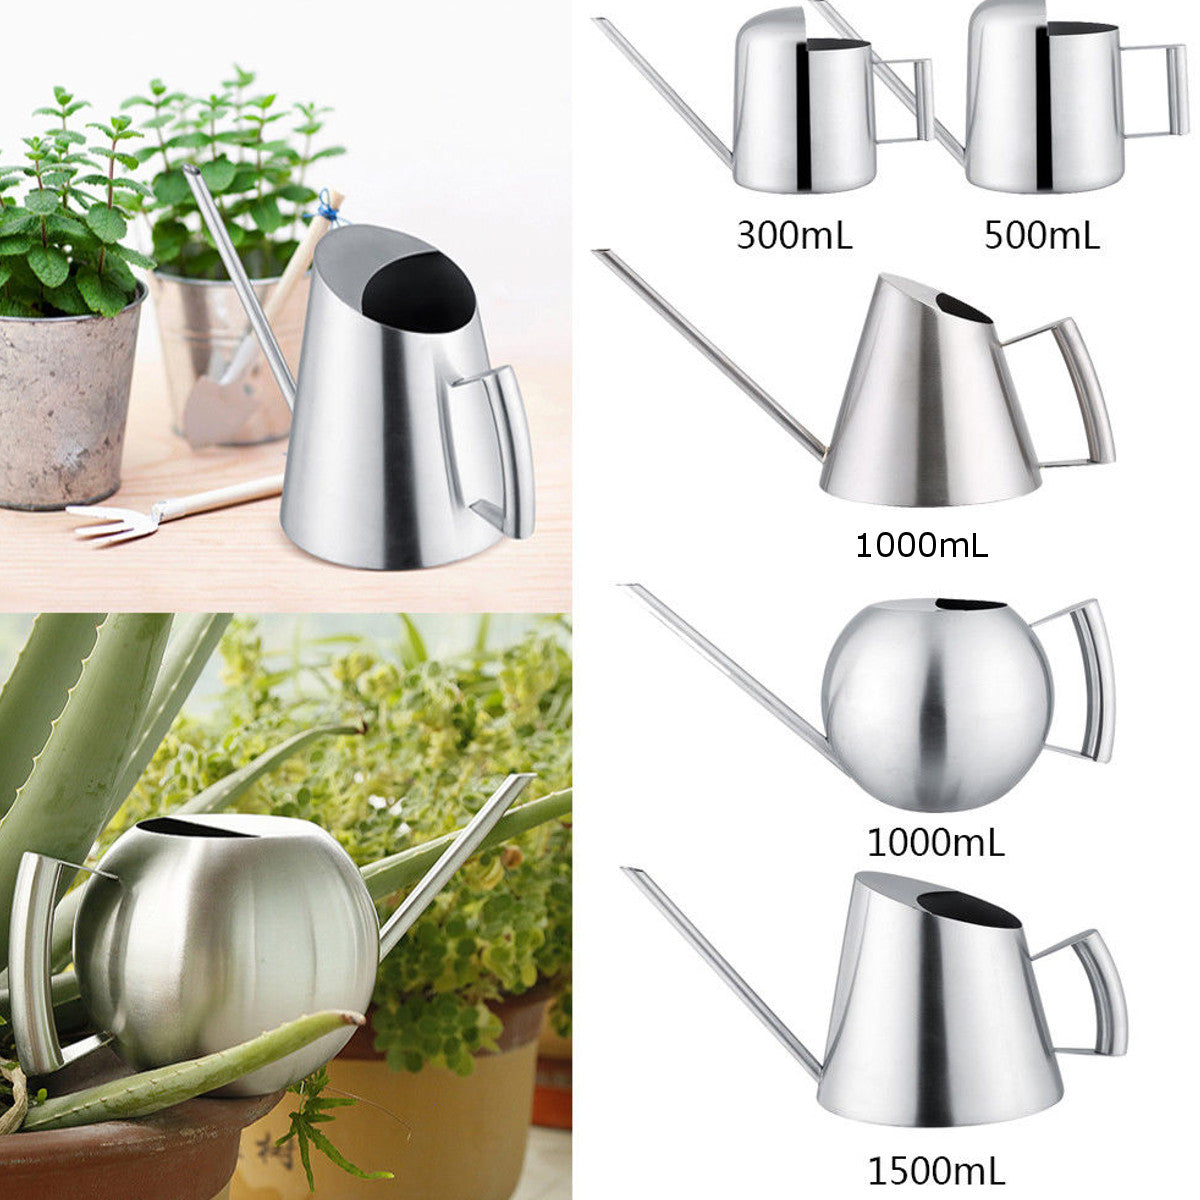 Household Stainless Steel Watering Can Kettle Garden Water Bottle Plant Flower Sprinkling Pot